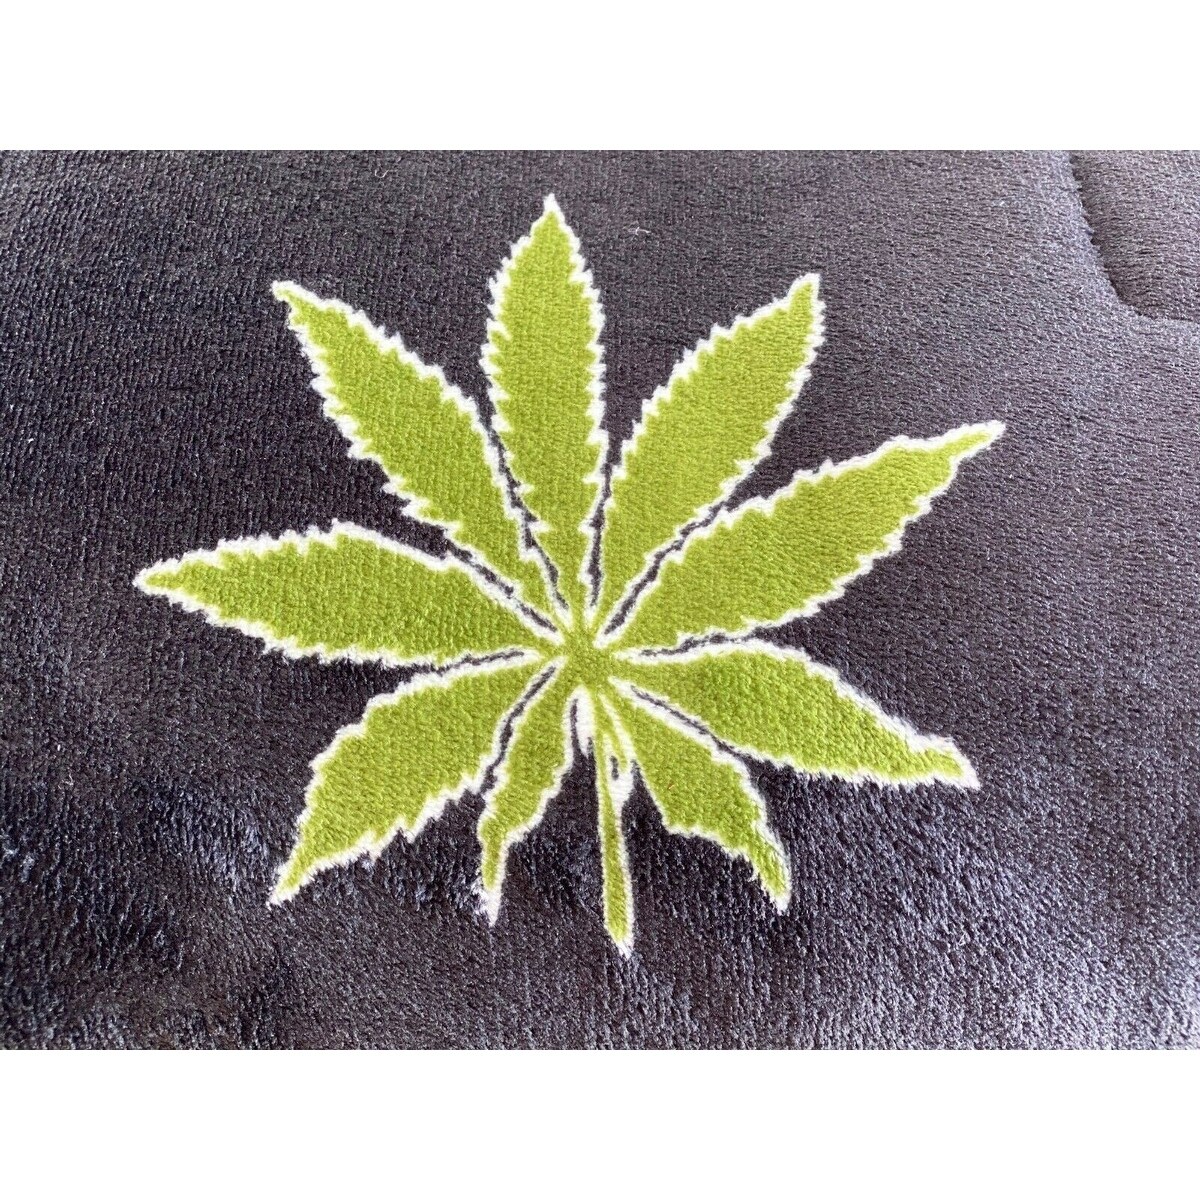 New Marijuana Warm Super Thick Soft Borrego Sherpa Quilted Blanket 3 Piece Set 